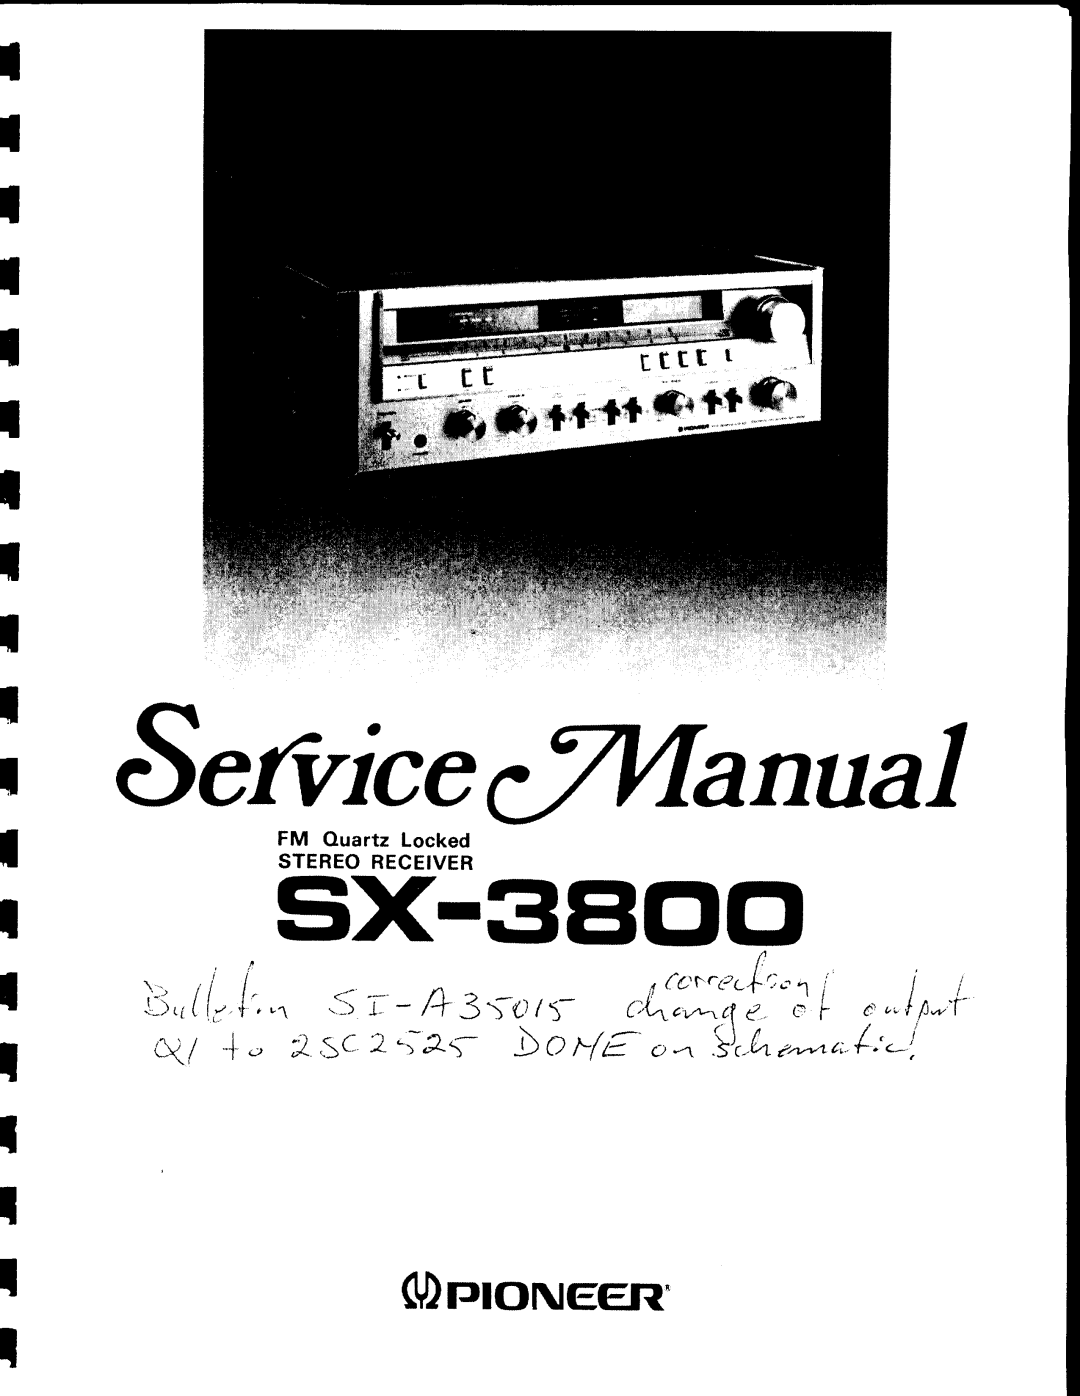 Pioneer SX-3800 manual Sefvice nual, ii,,ii,i,,..,s r - ft3rcrl ttr!L *,.ir*.t, DrrroN€ER 